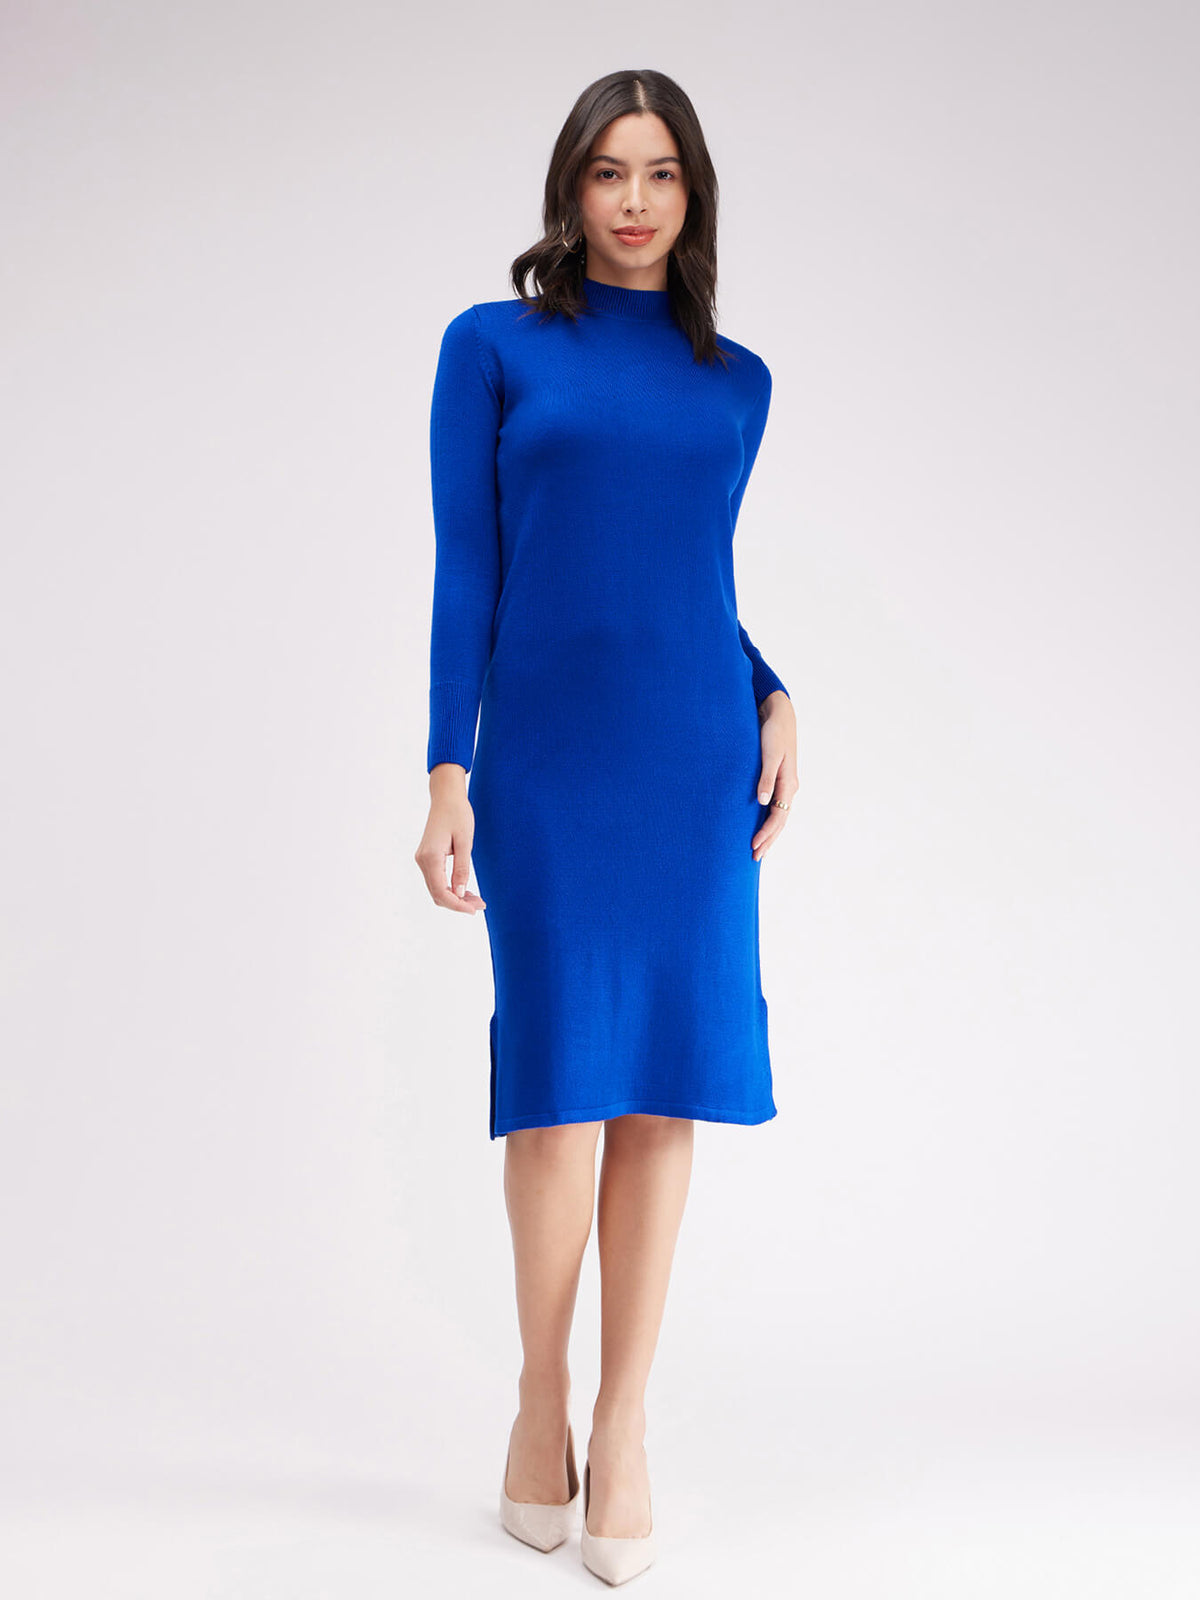 LivSoft Band Neck Sweater Dress - Royal Blue